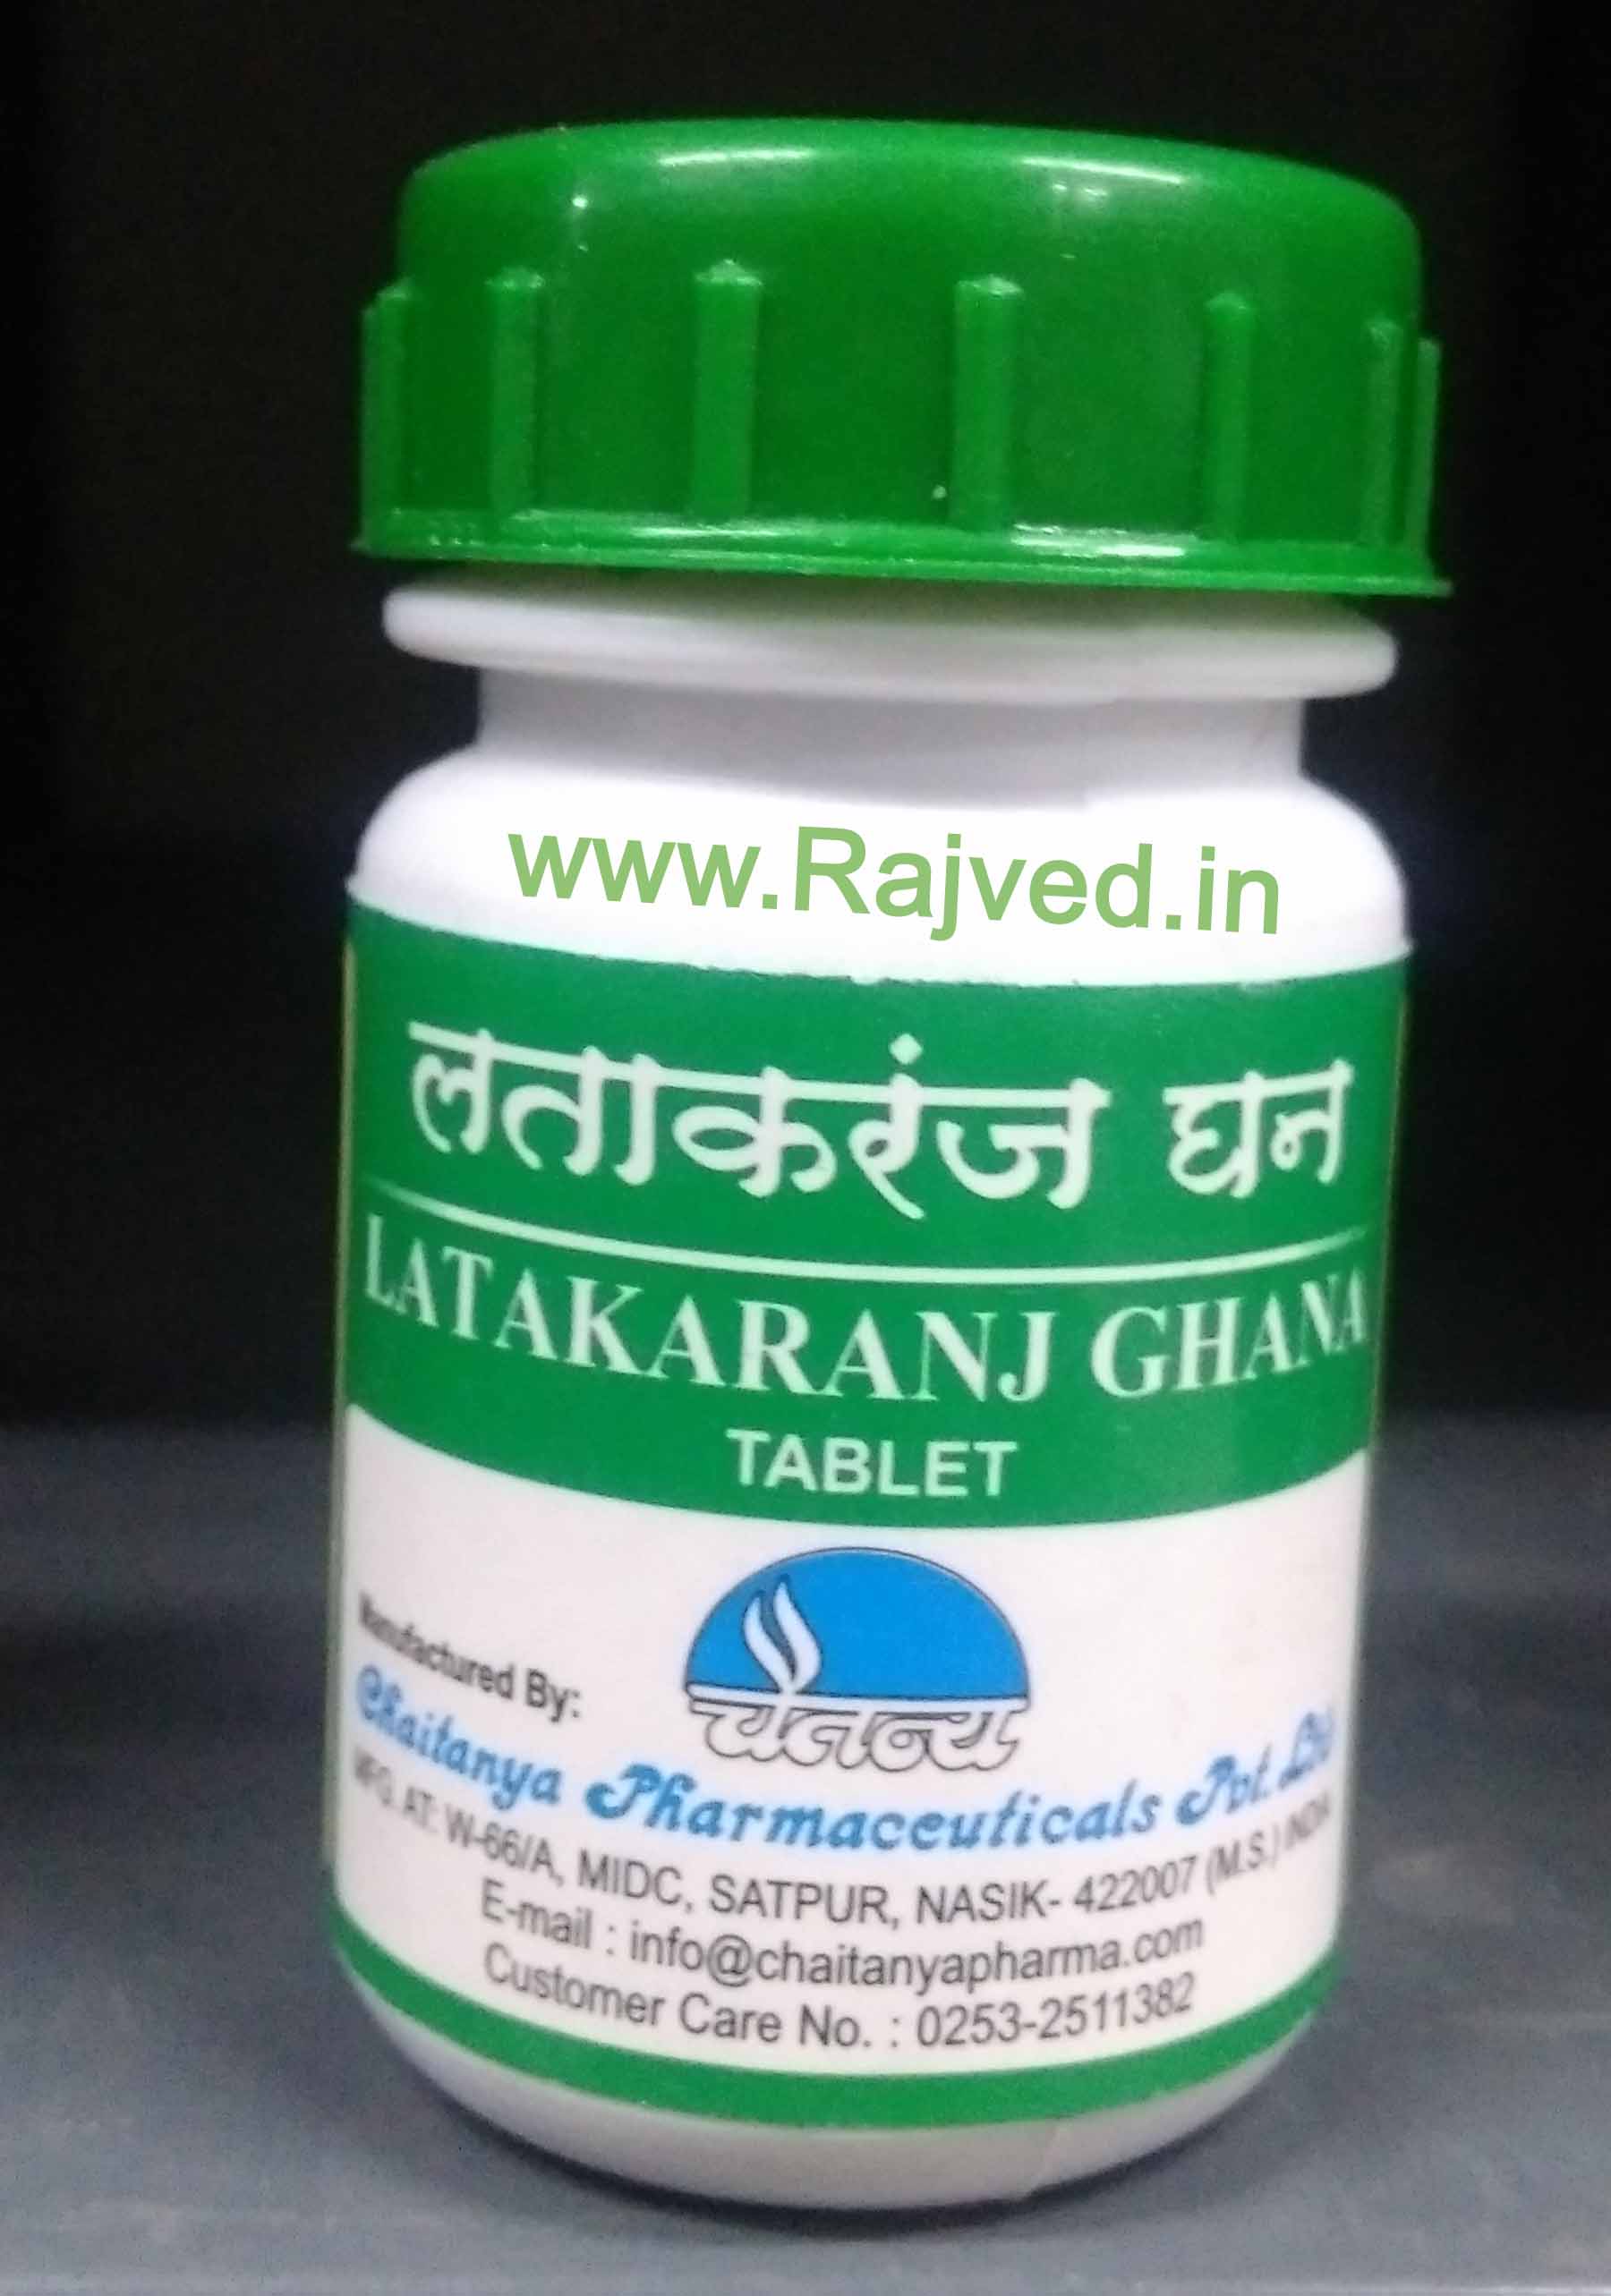 latakaranj ghana 60tab upto 20% off chaitanya pharmaceuticals